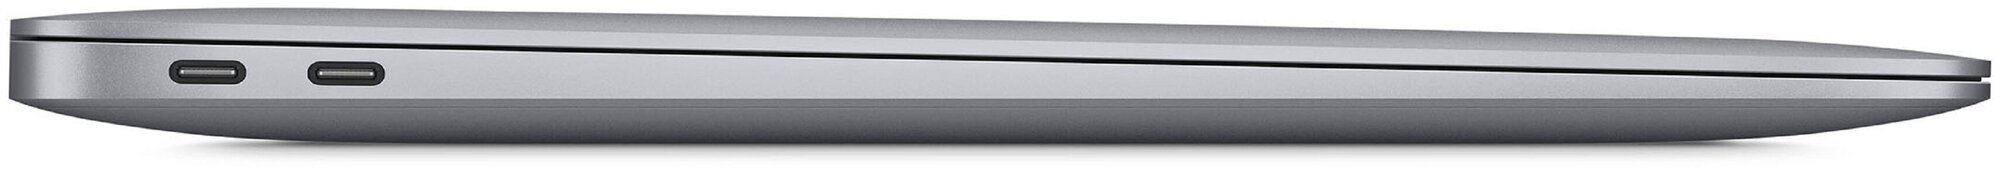 Ноутбук Apple MacBook Air 13 M1 (2020) MGNA3 512GB Silver (Серебристый)